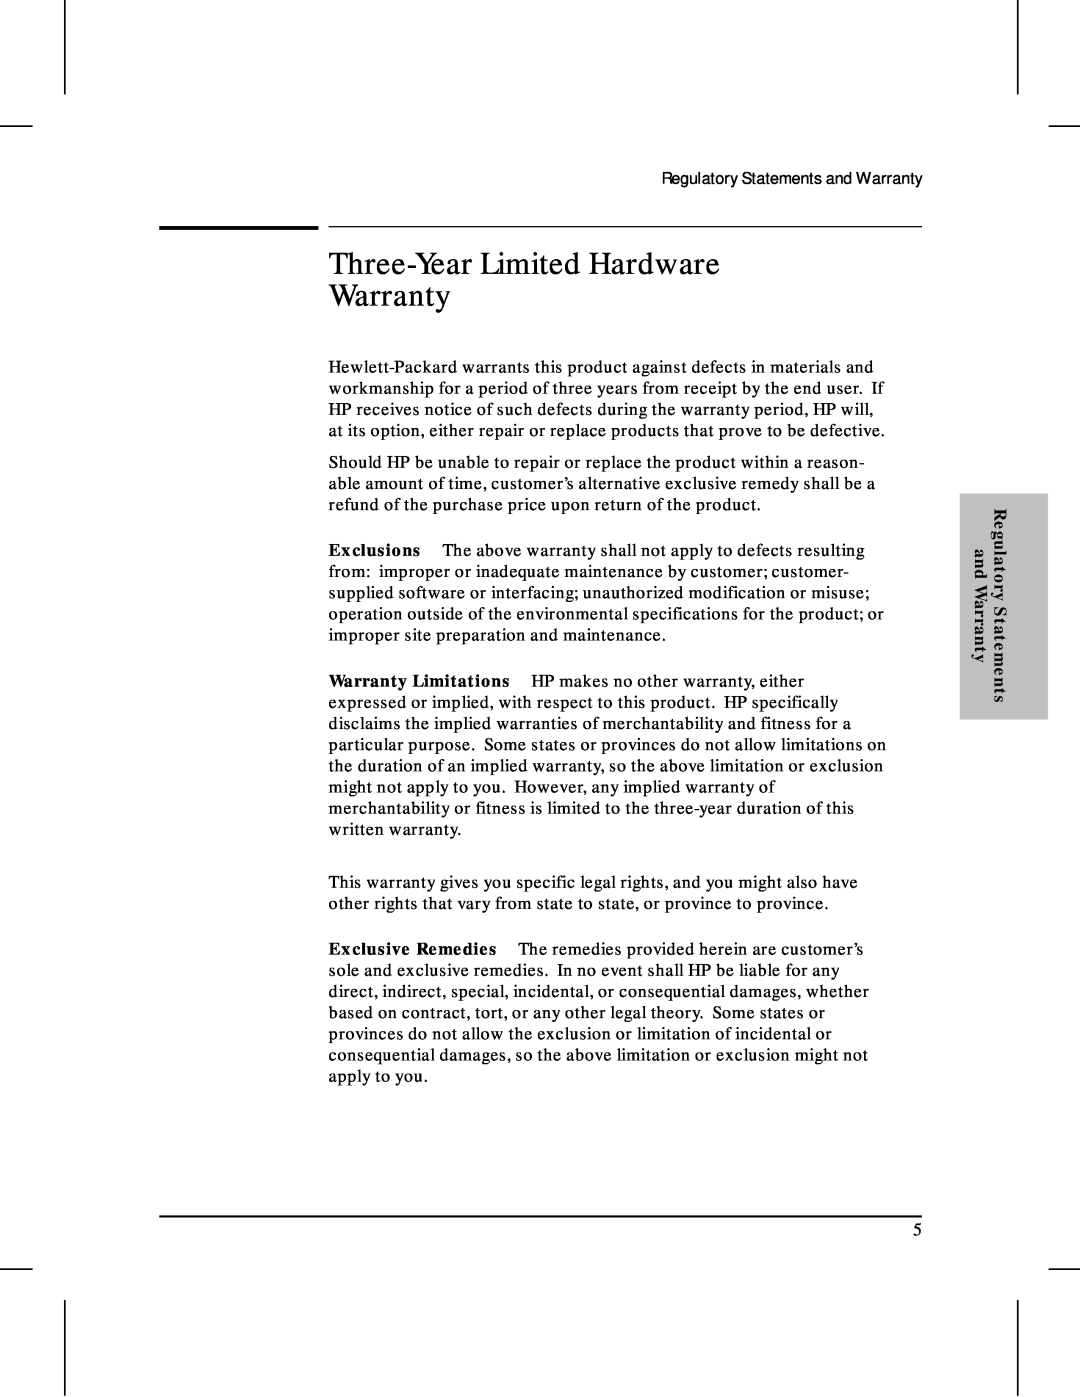 HP 480 manual Three-Year Limited Hardware Warranty, and Warranty, Regulatory Statements 